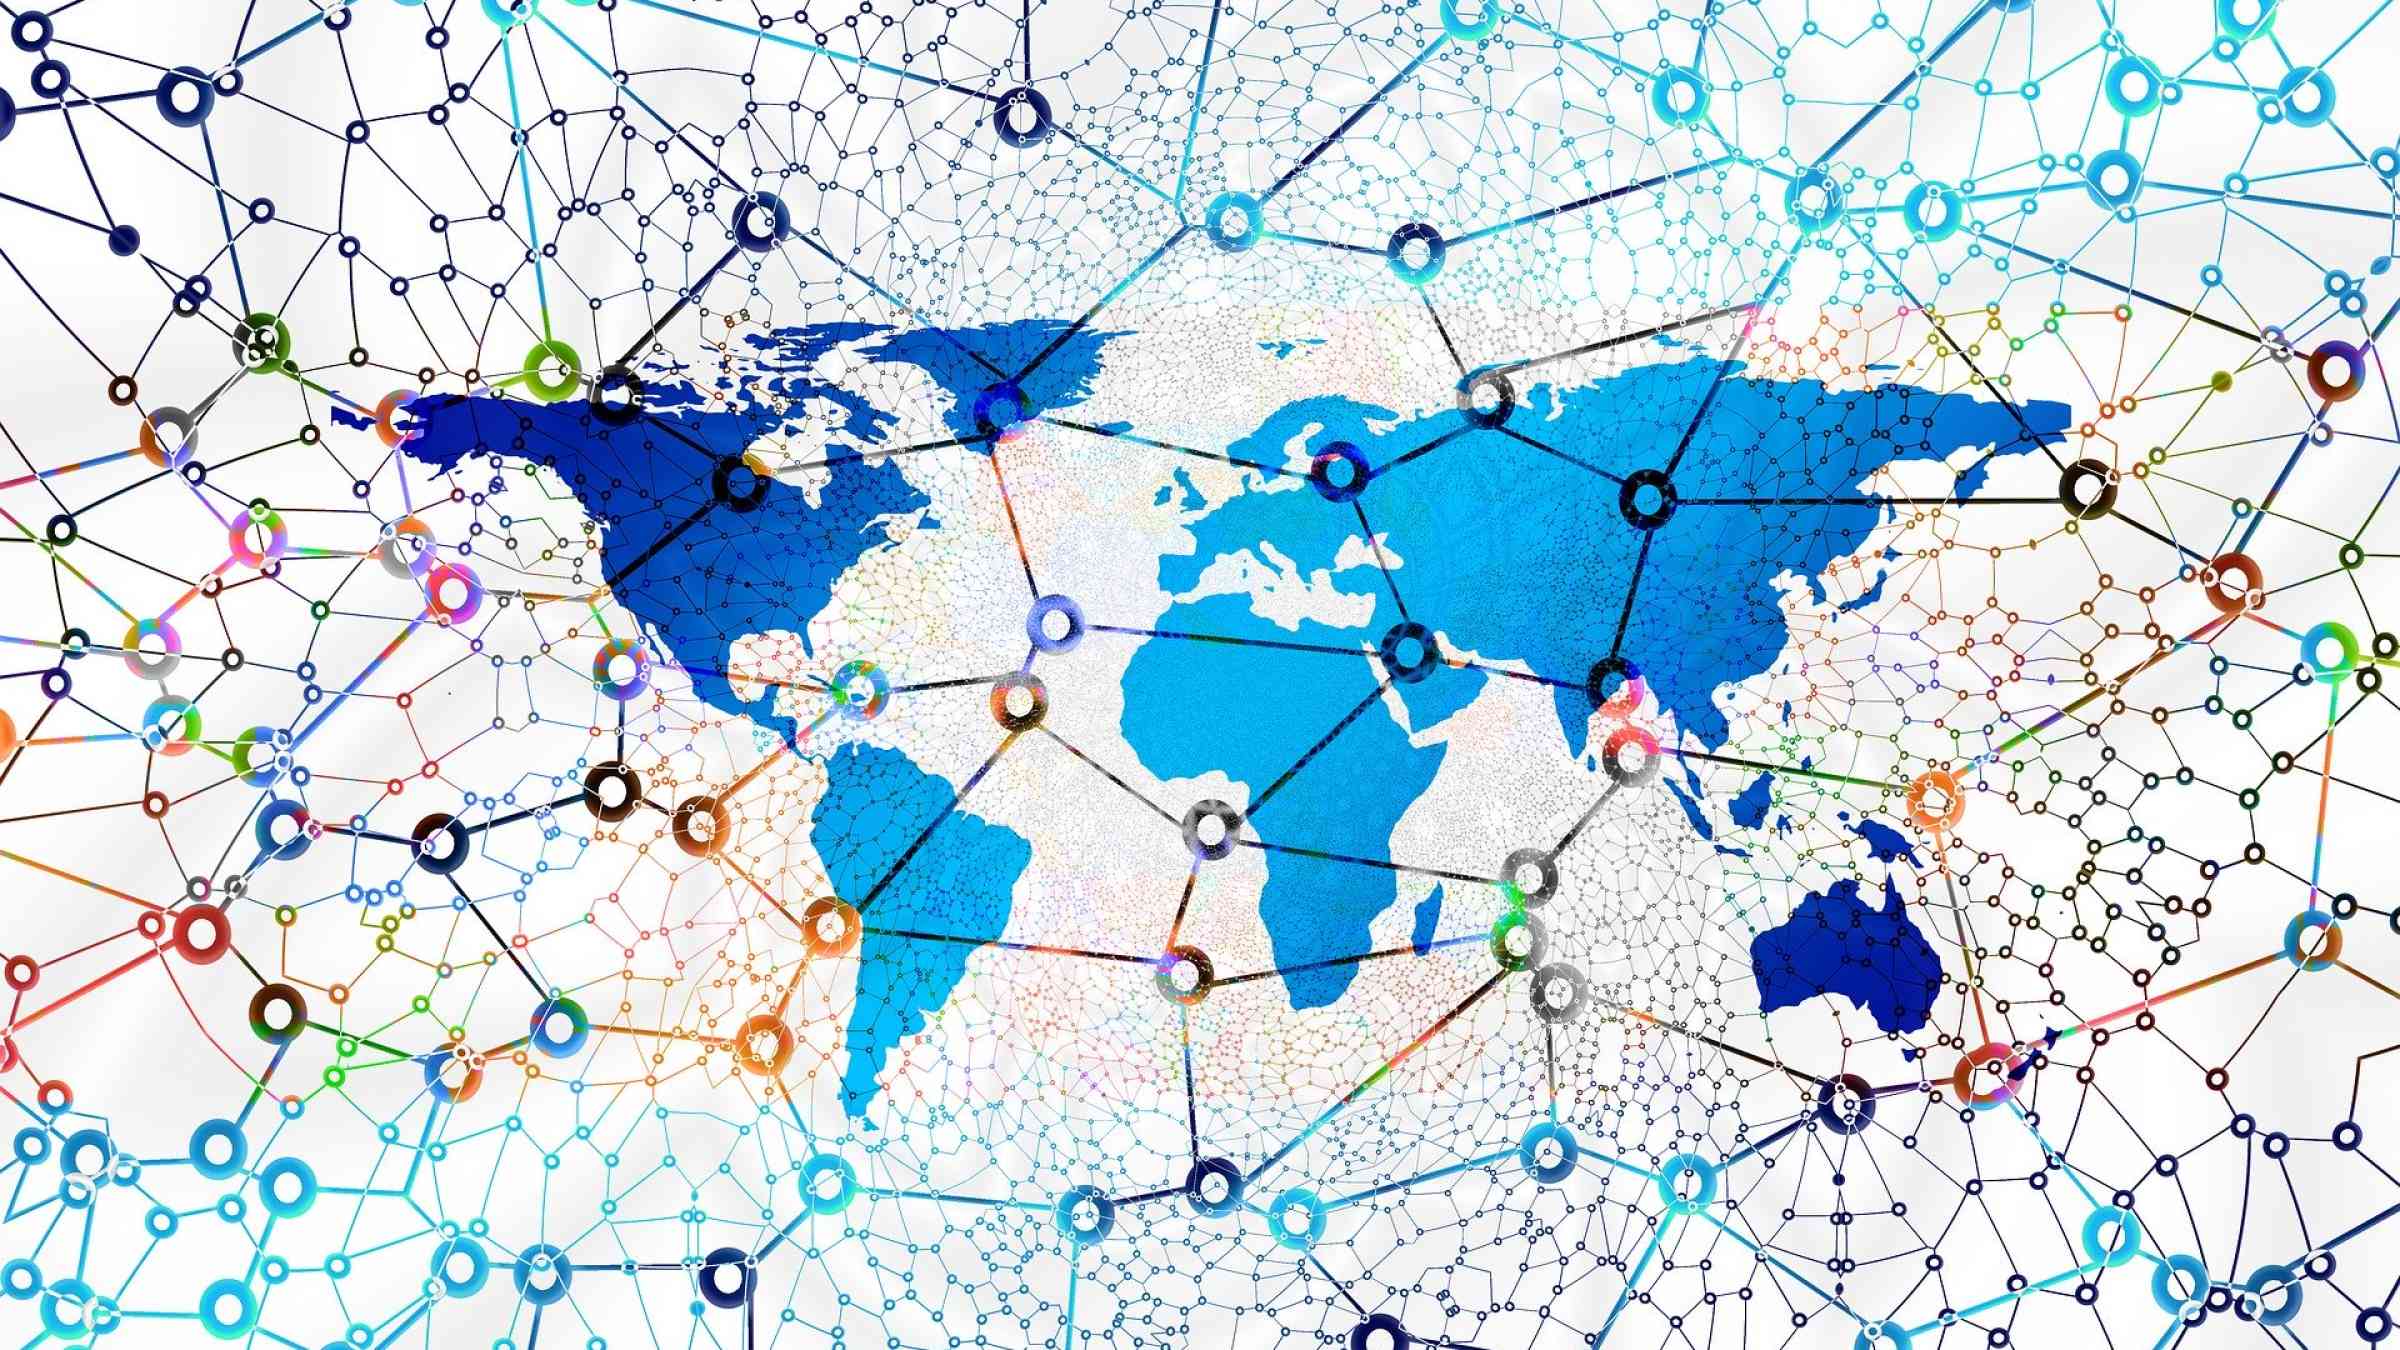 World networks